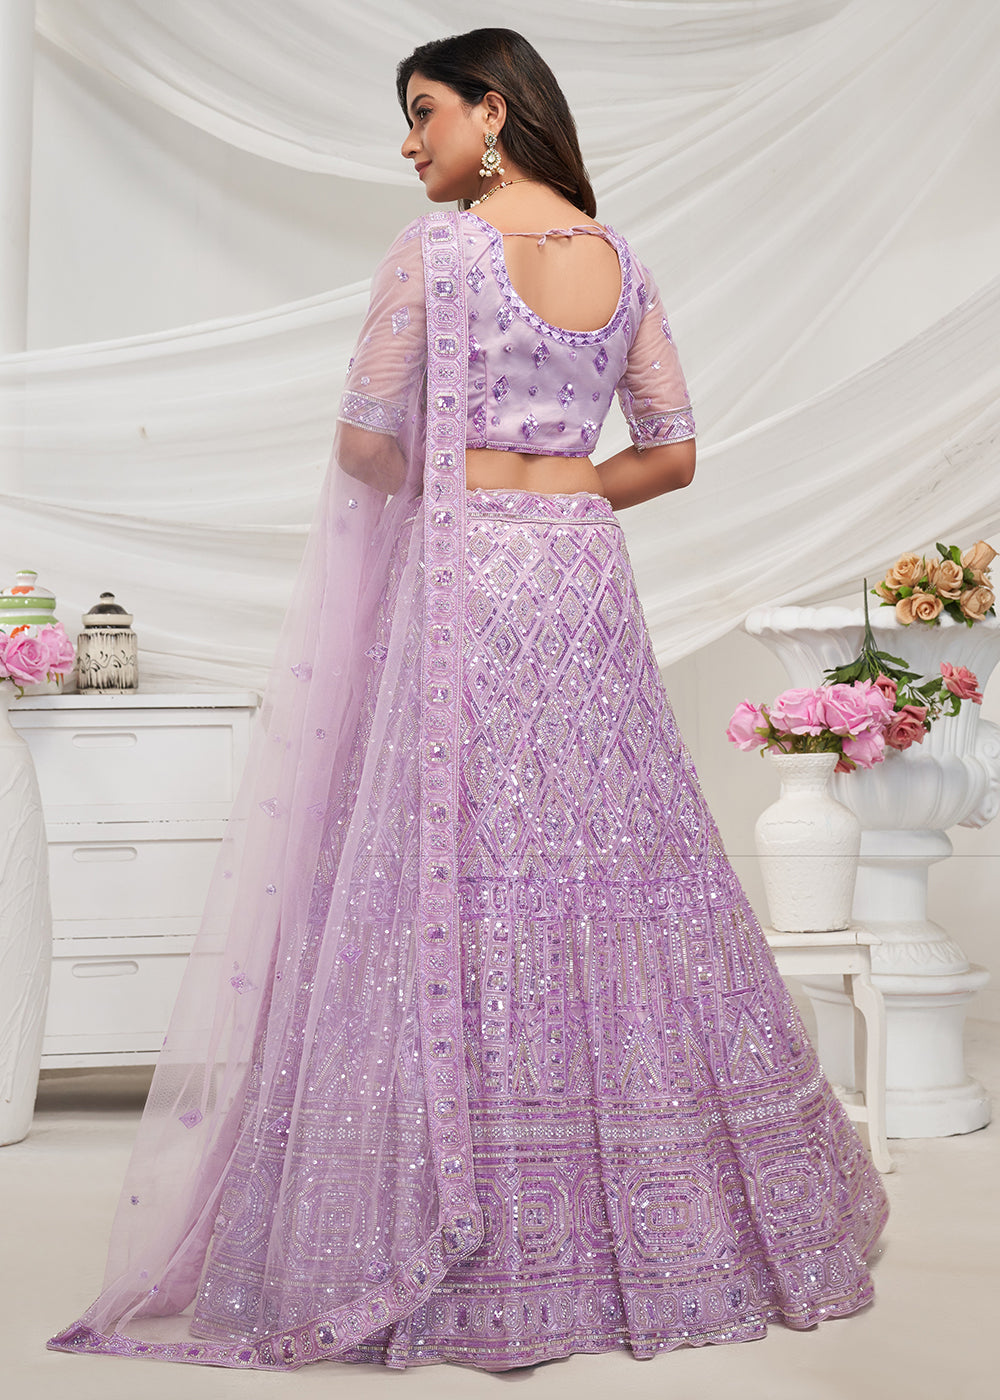 Buy Now Pearled Mauve Heavy Embroidered Bridal Lehenga Choli Online in USA, UK, Canada & Worldwide at Empress Clothing.